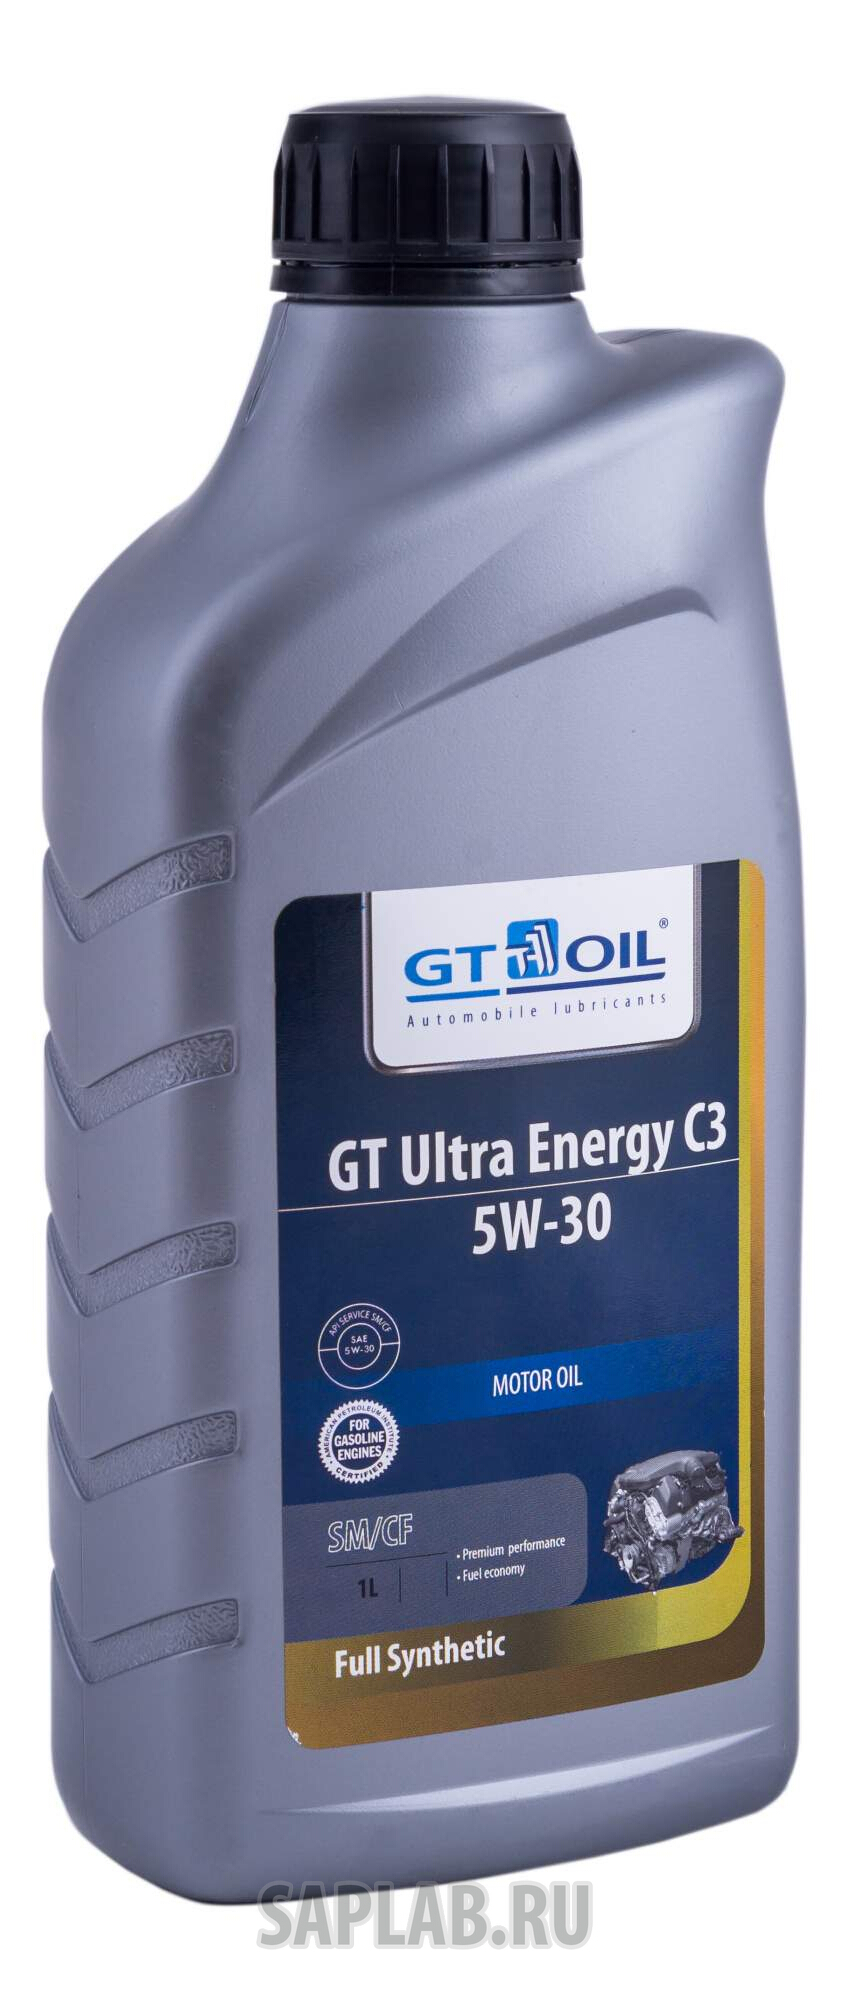 Купить запчасть GT OIL - 8809059407929 GT Ultra Energy C3 SAE 5W-30 (1л)